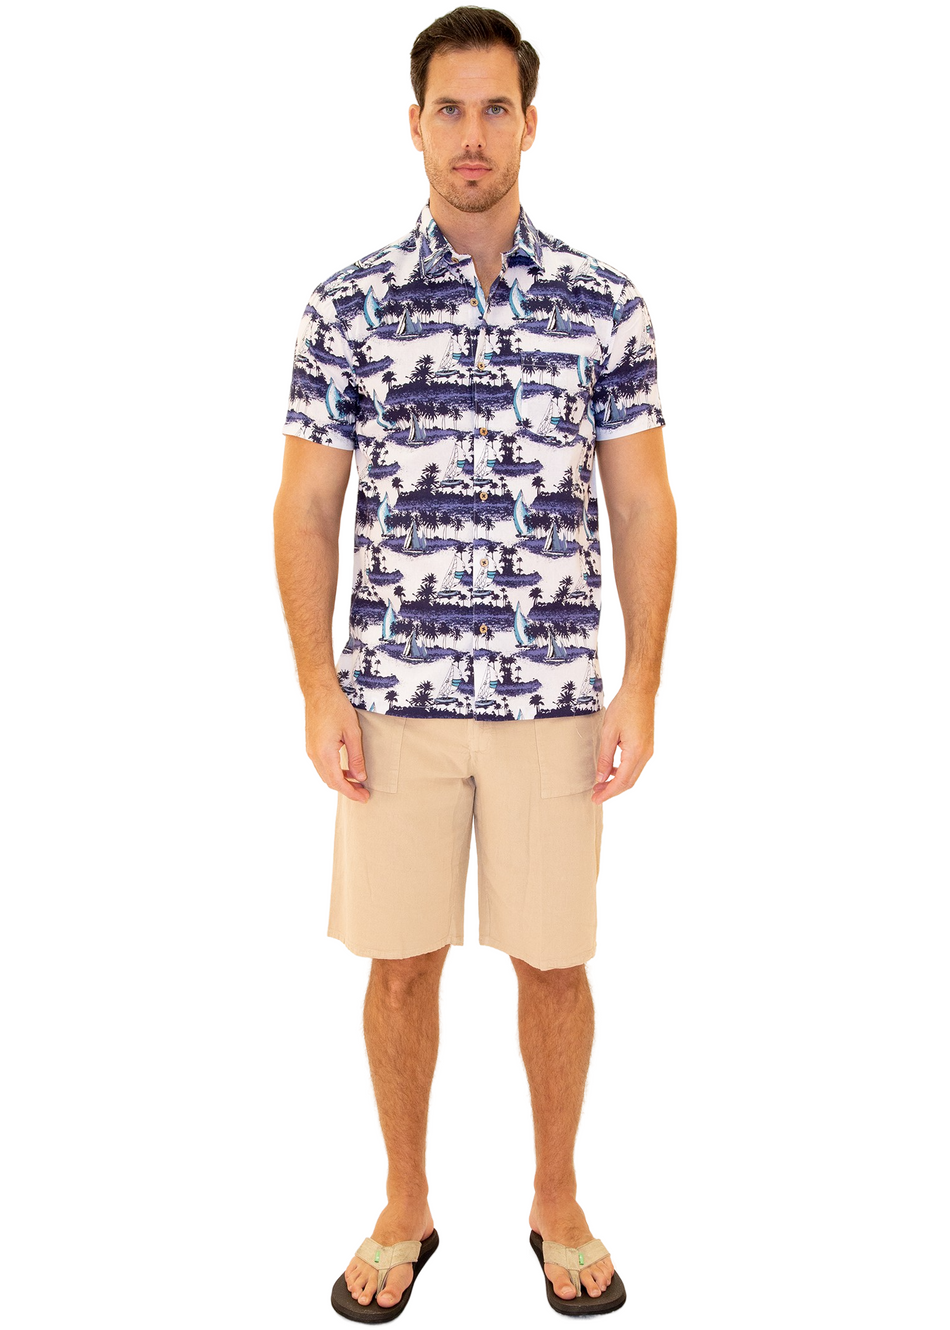 206030 - White Cotton Hawaiian Pocket Shirt